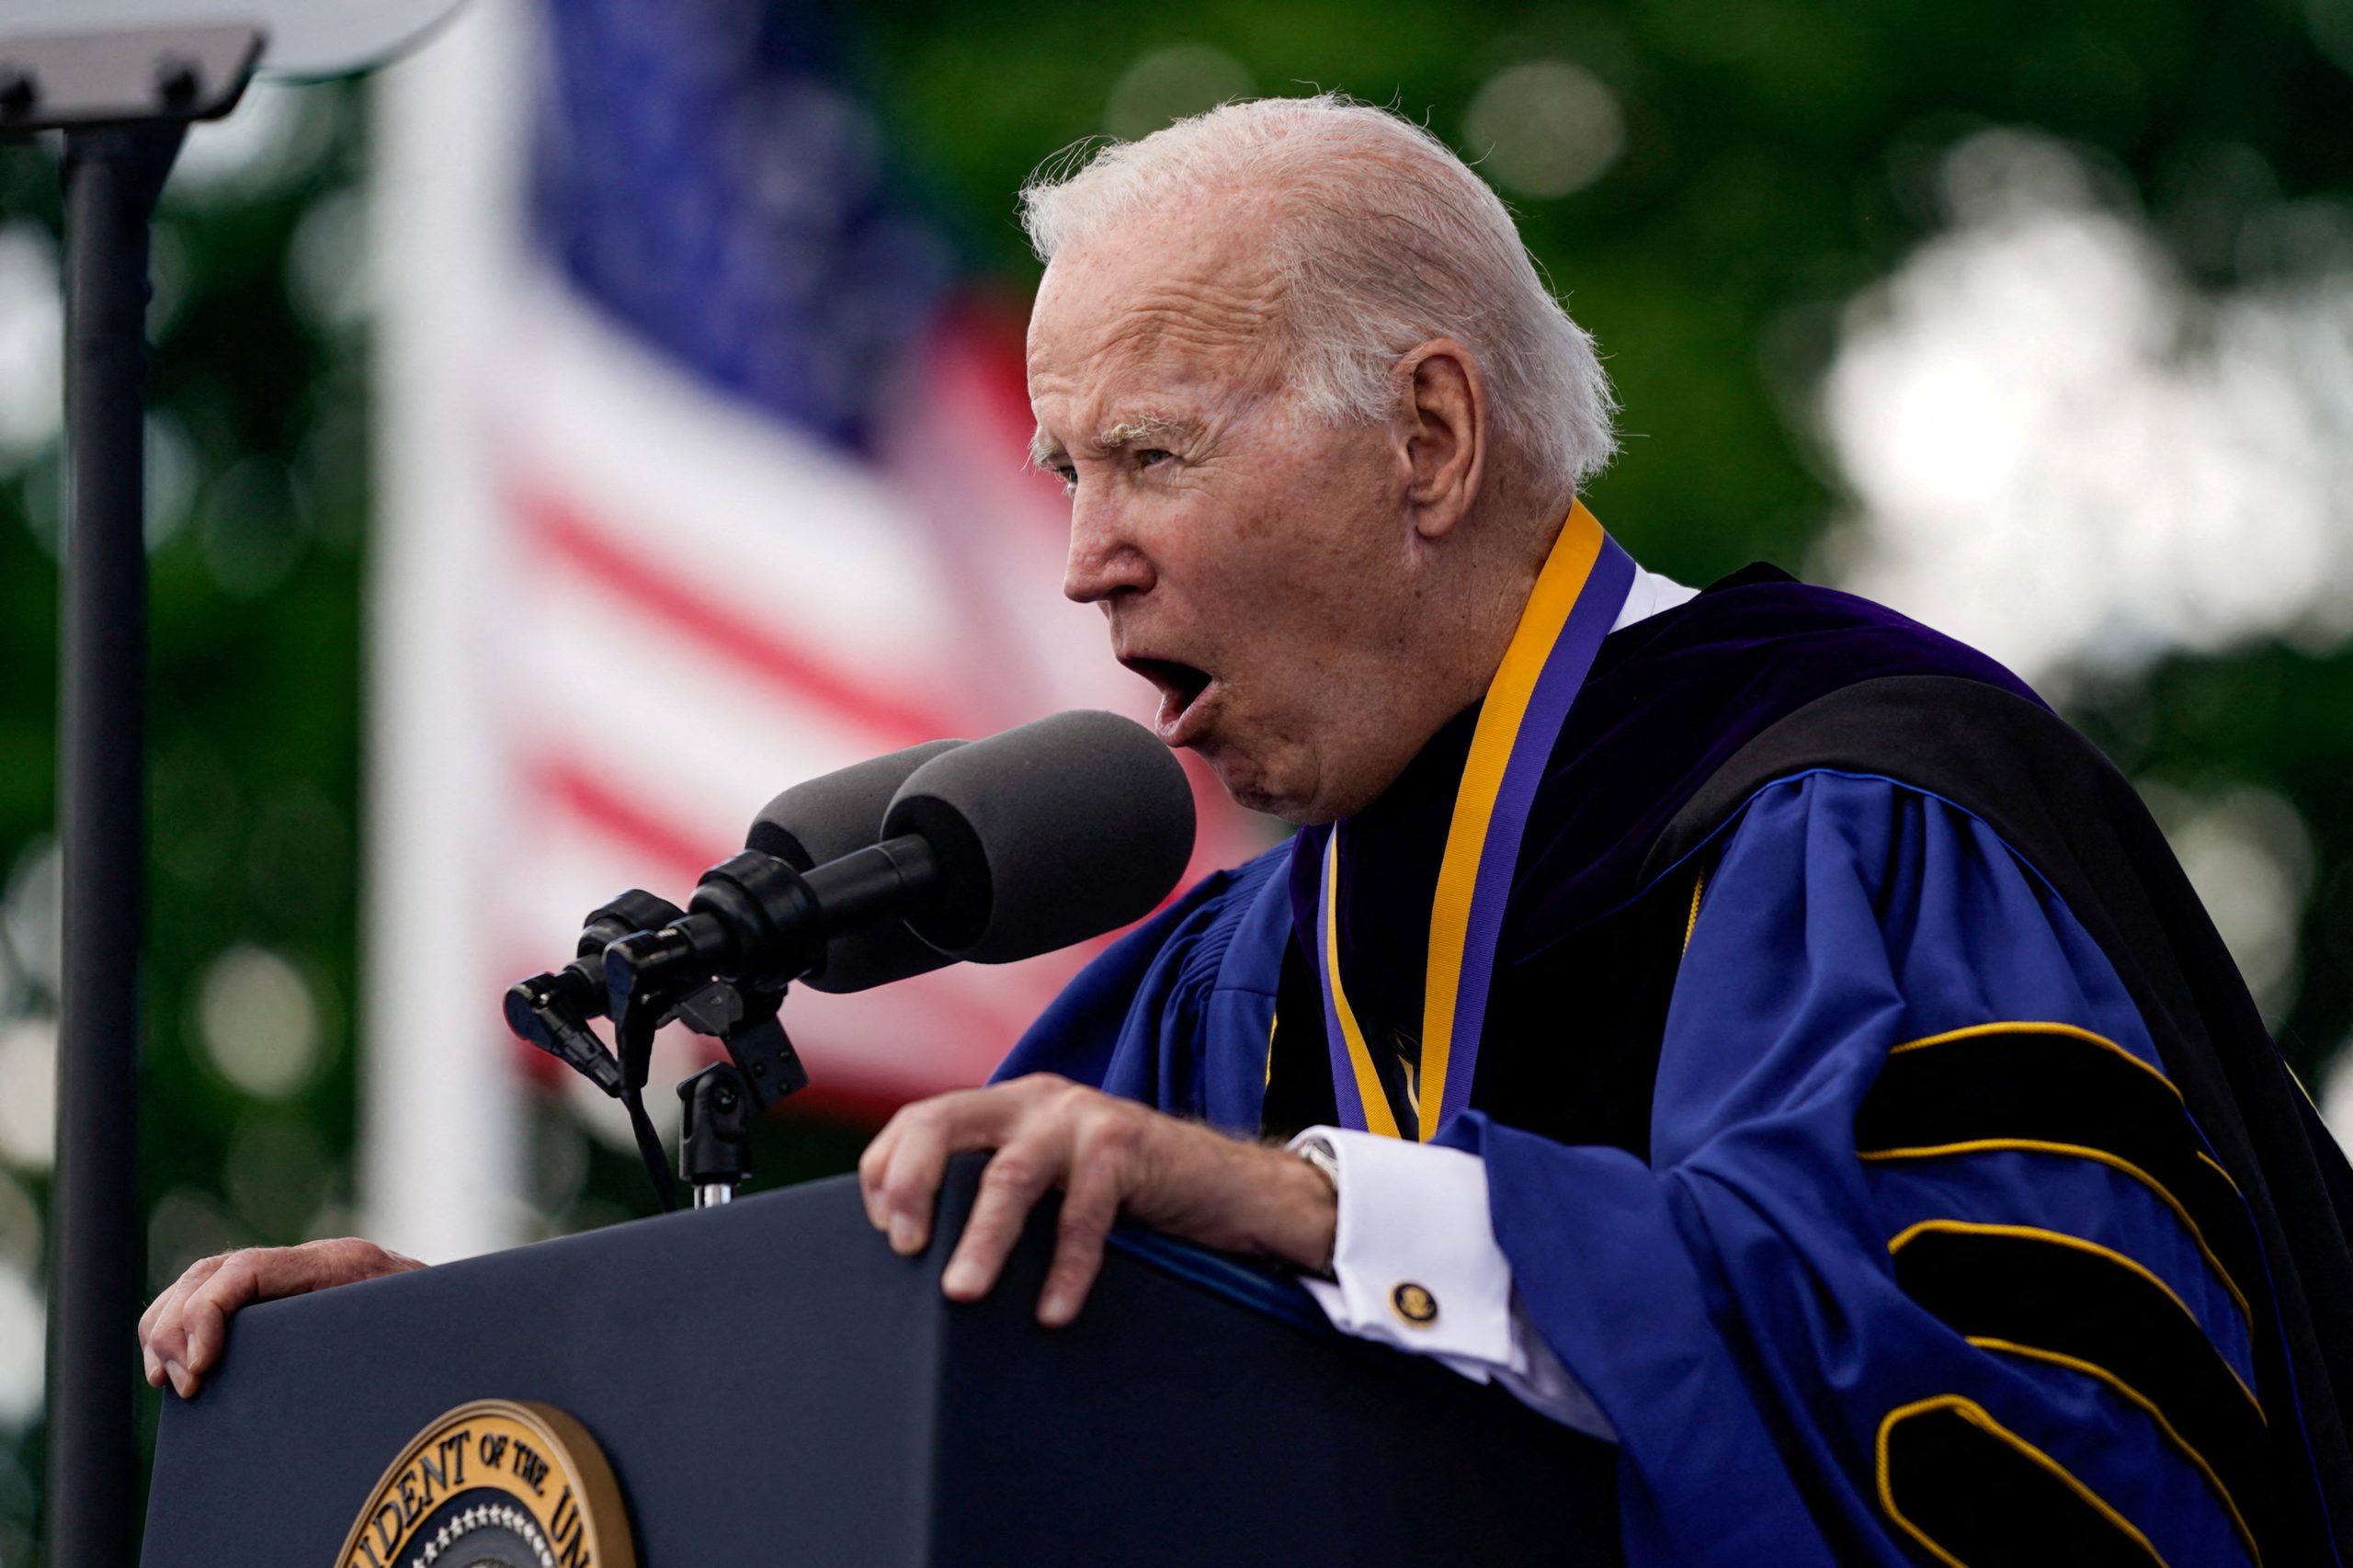 FILE PHOTO: U.S. President Joe Biden delivers the commencement address at the University of Delaware in Newark, Delaware, U.S., May 28, 2022. REUTERS/Elizabeth Frantz/File Photo